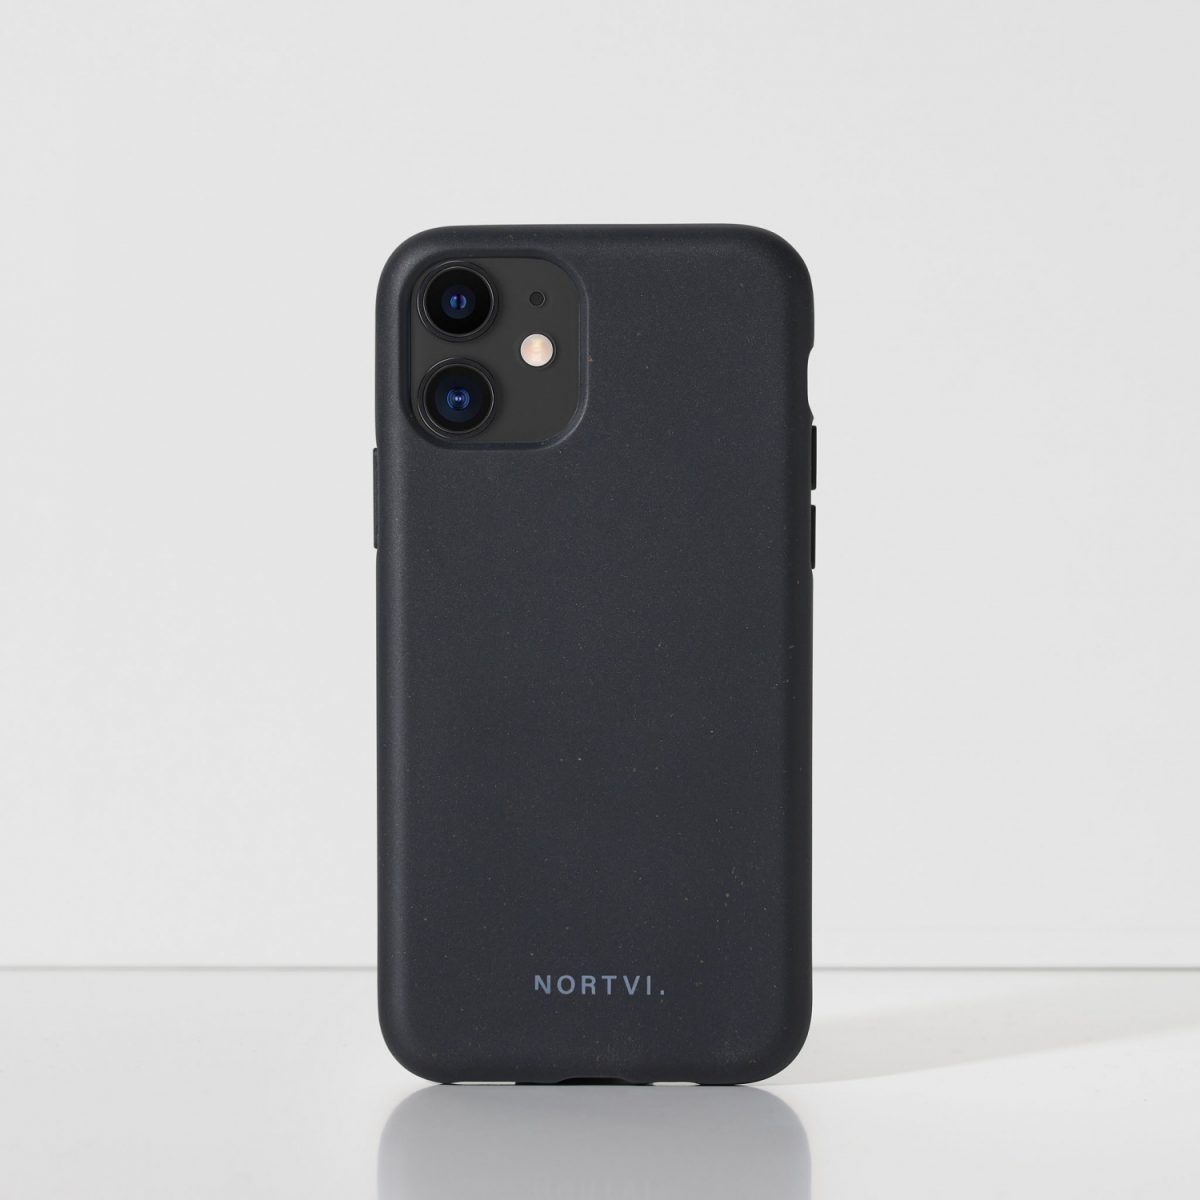 NORTVI black phone case for iPhone 11 case